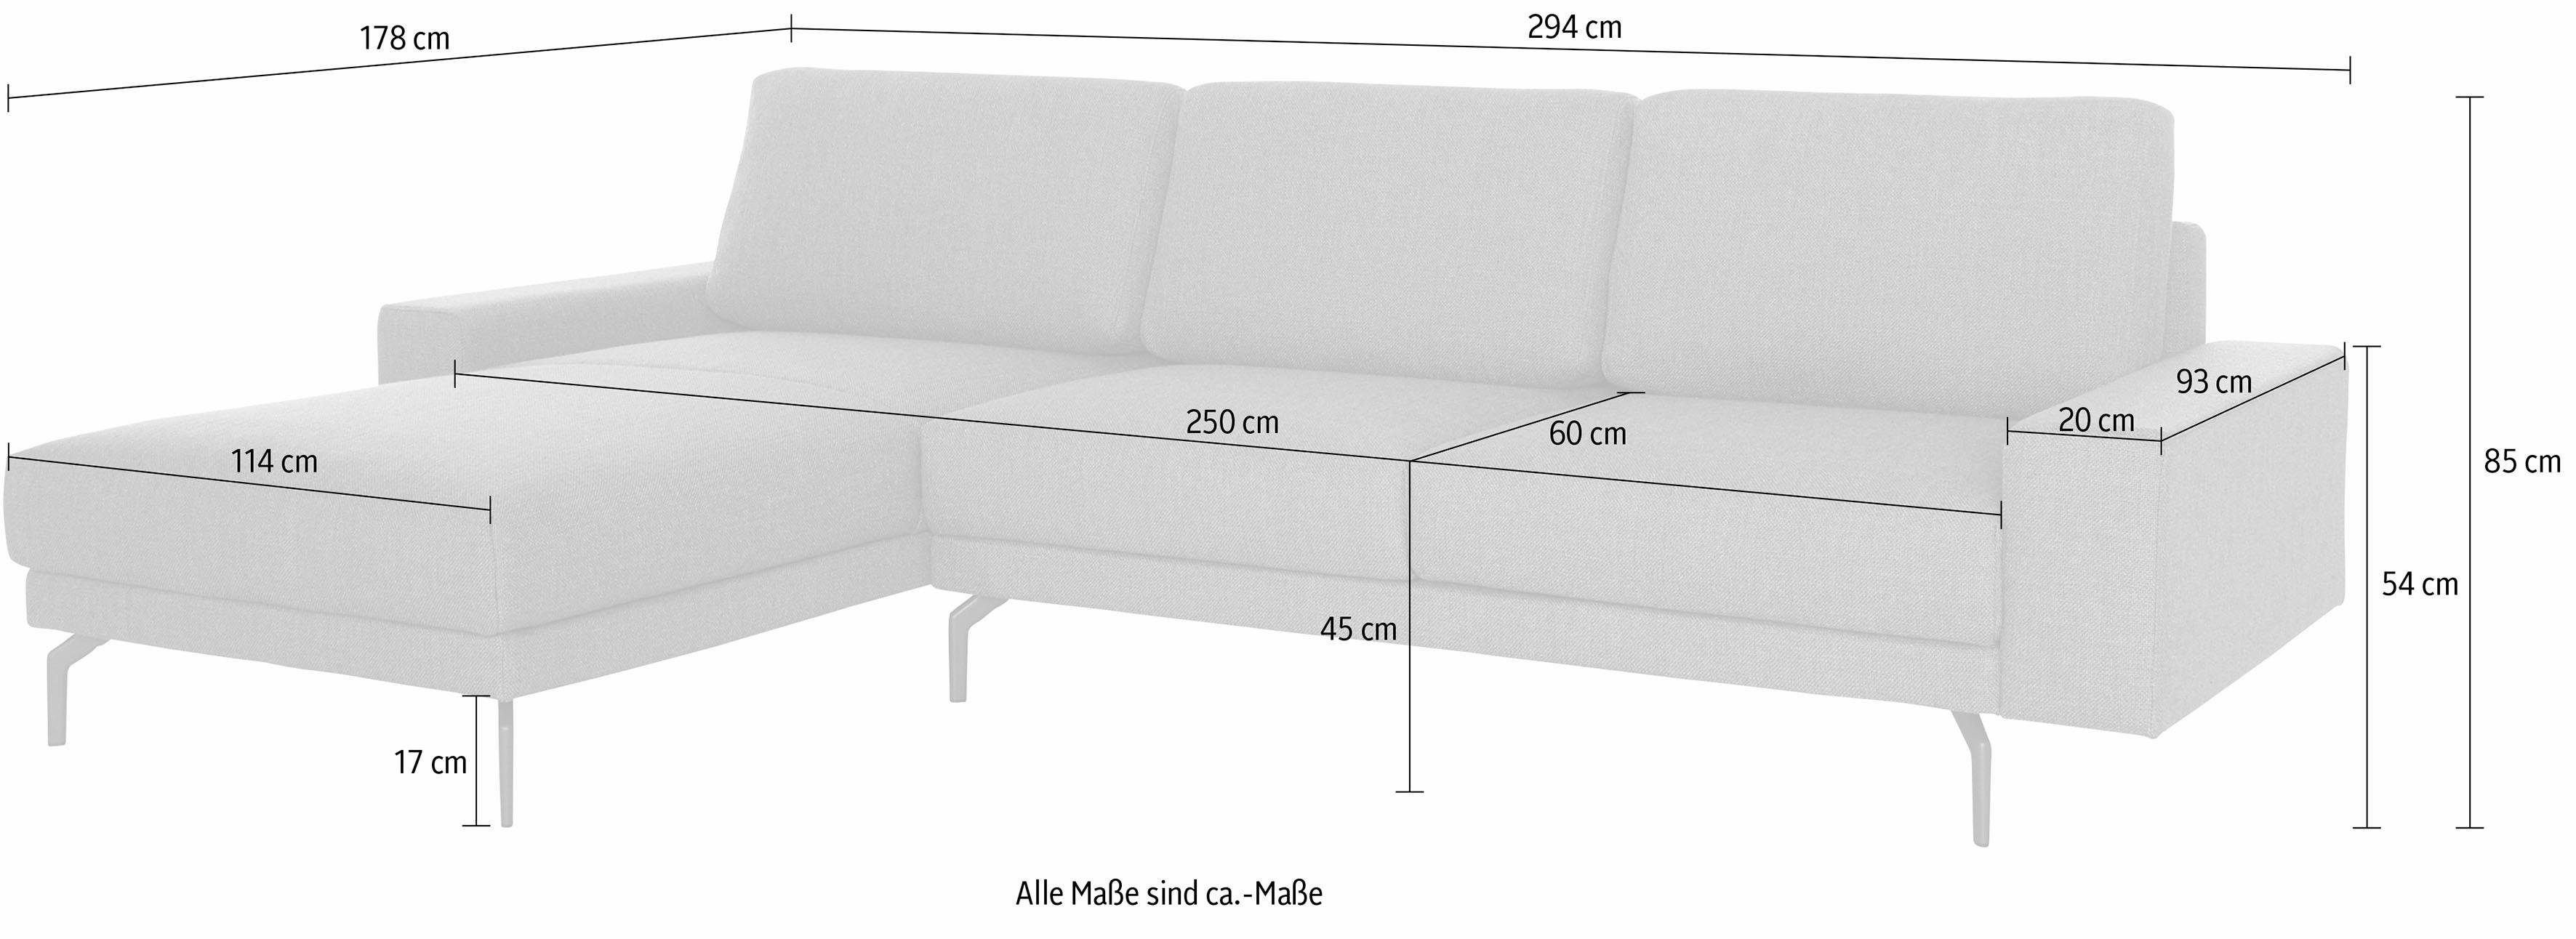 Ecksofa und hs.450, umbragrau, 294 Breite hülsta in sofa niedrig, Alugussfüße breit Armlehne cm